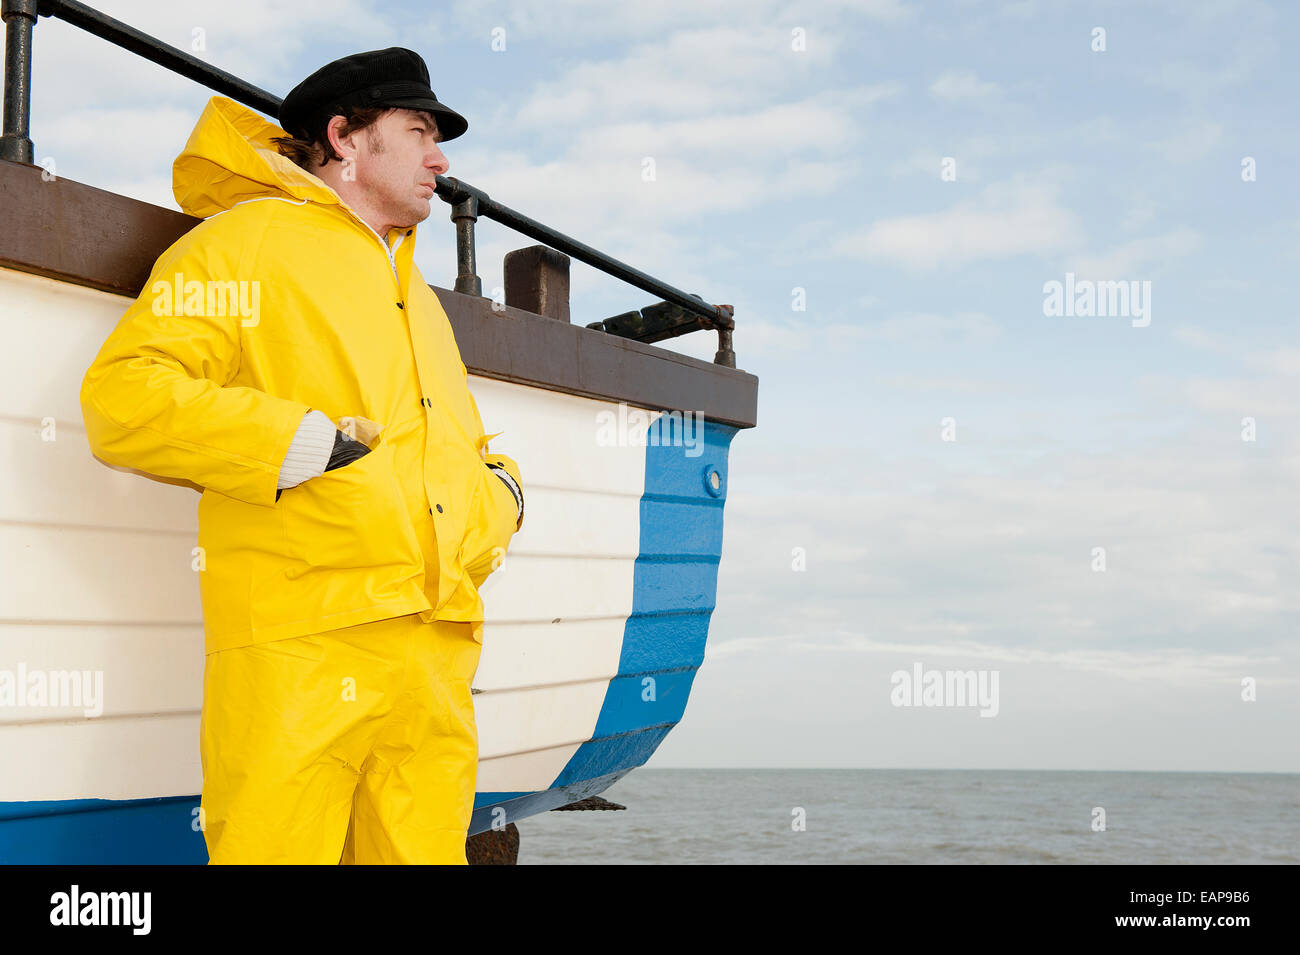 Sea fisherman in yellow waterproof overalls, standing by his